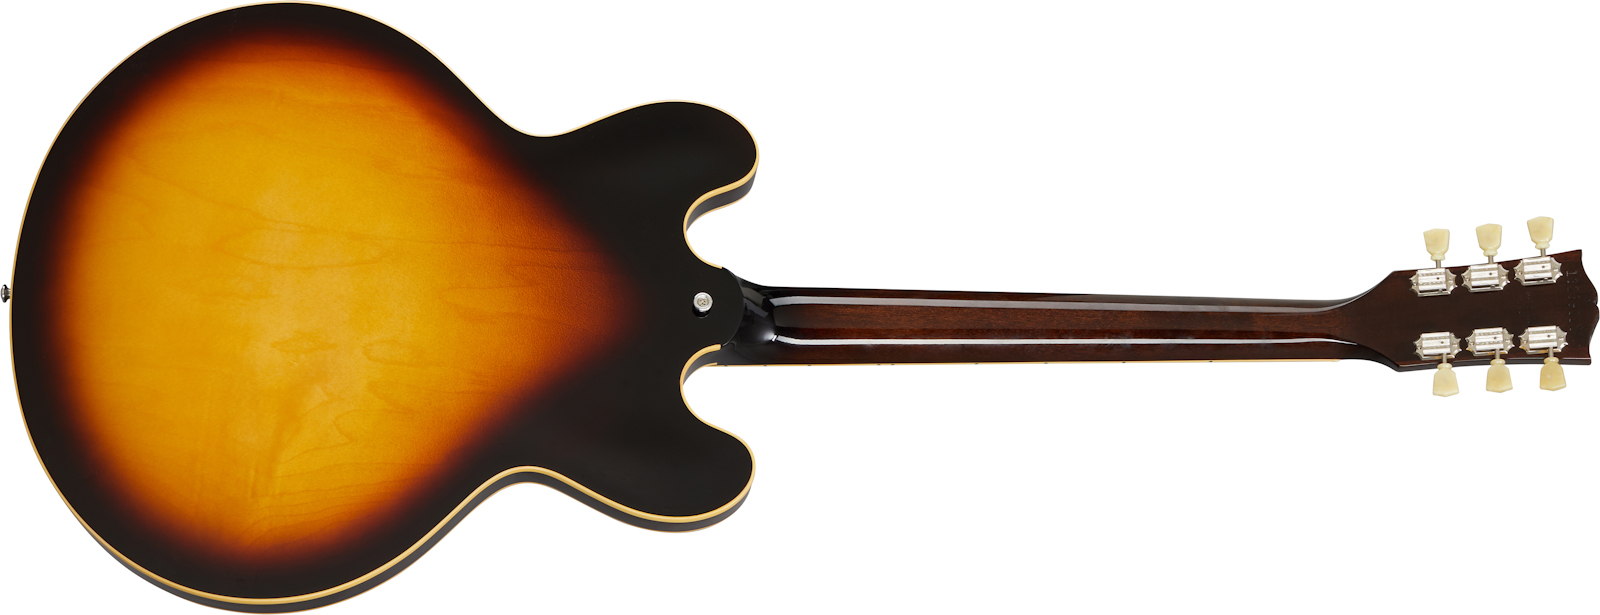 Gibson Es-345 Lh Original Gaucher 2h Ht Rw - Vintage Burst - Left-handed electric guitar - Variation 1